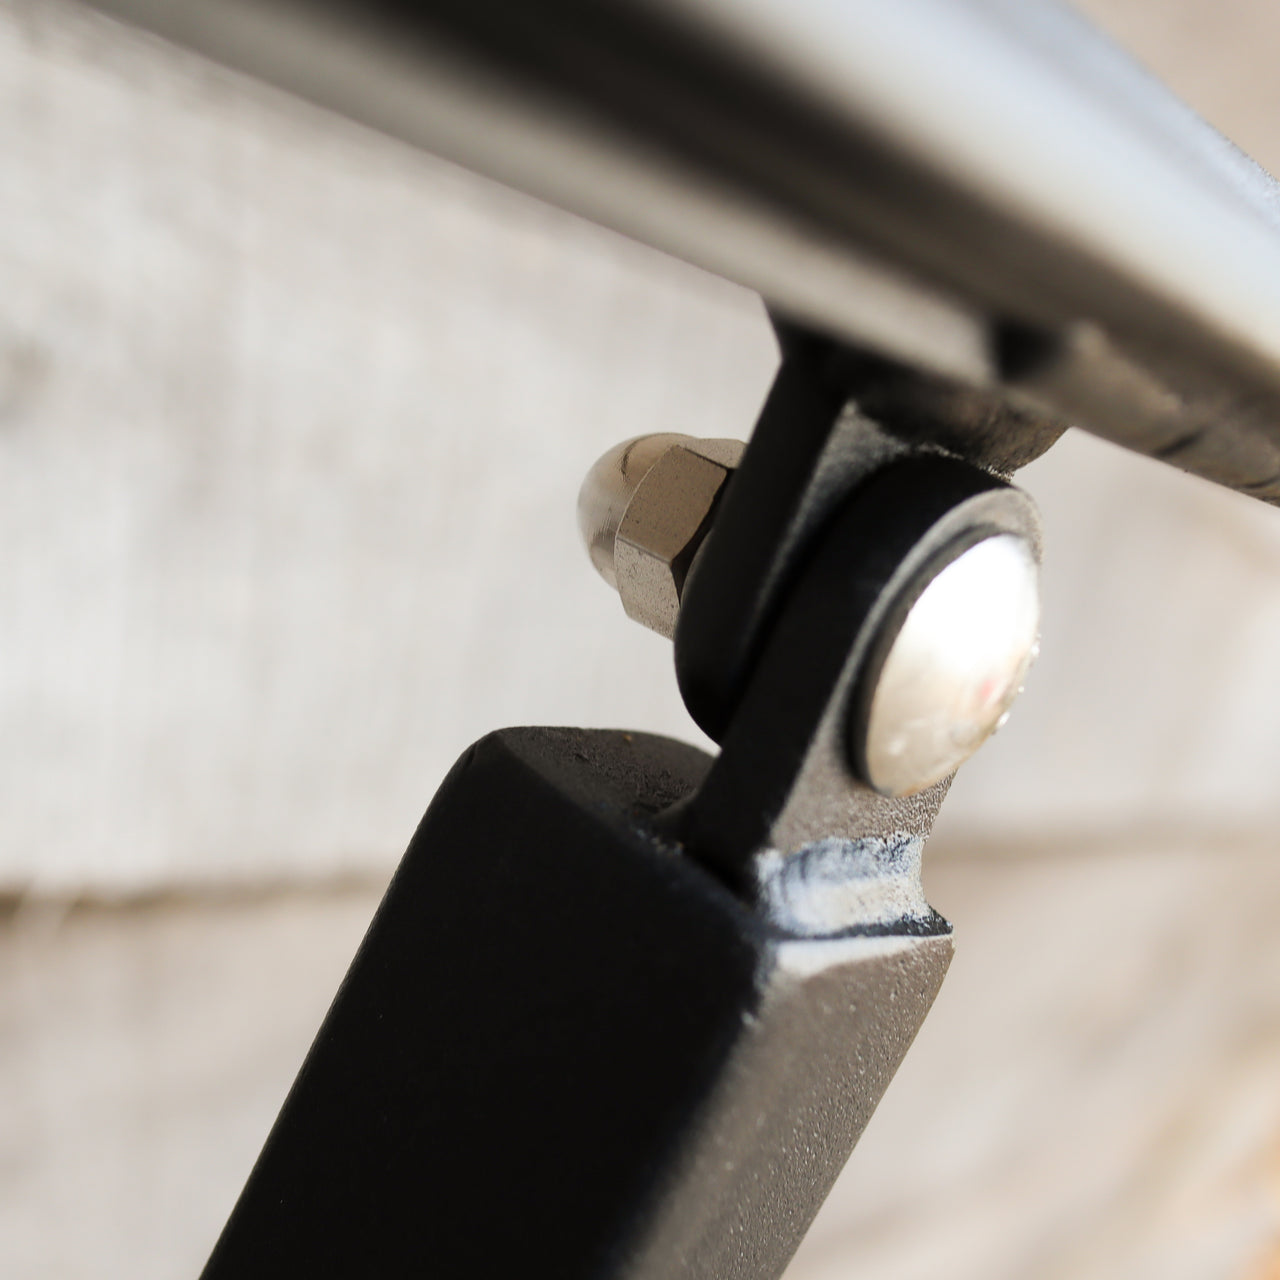 Custom Length Adjustable Metal Handrail with Scroll End - Make A Rail Grab Rail - Victorian Stair Decor